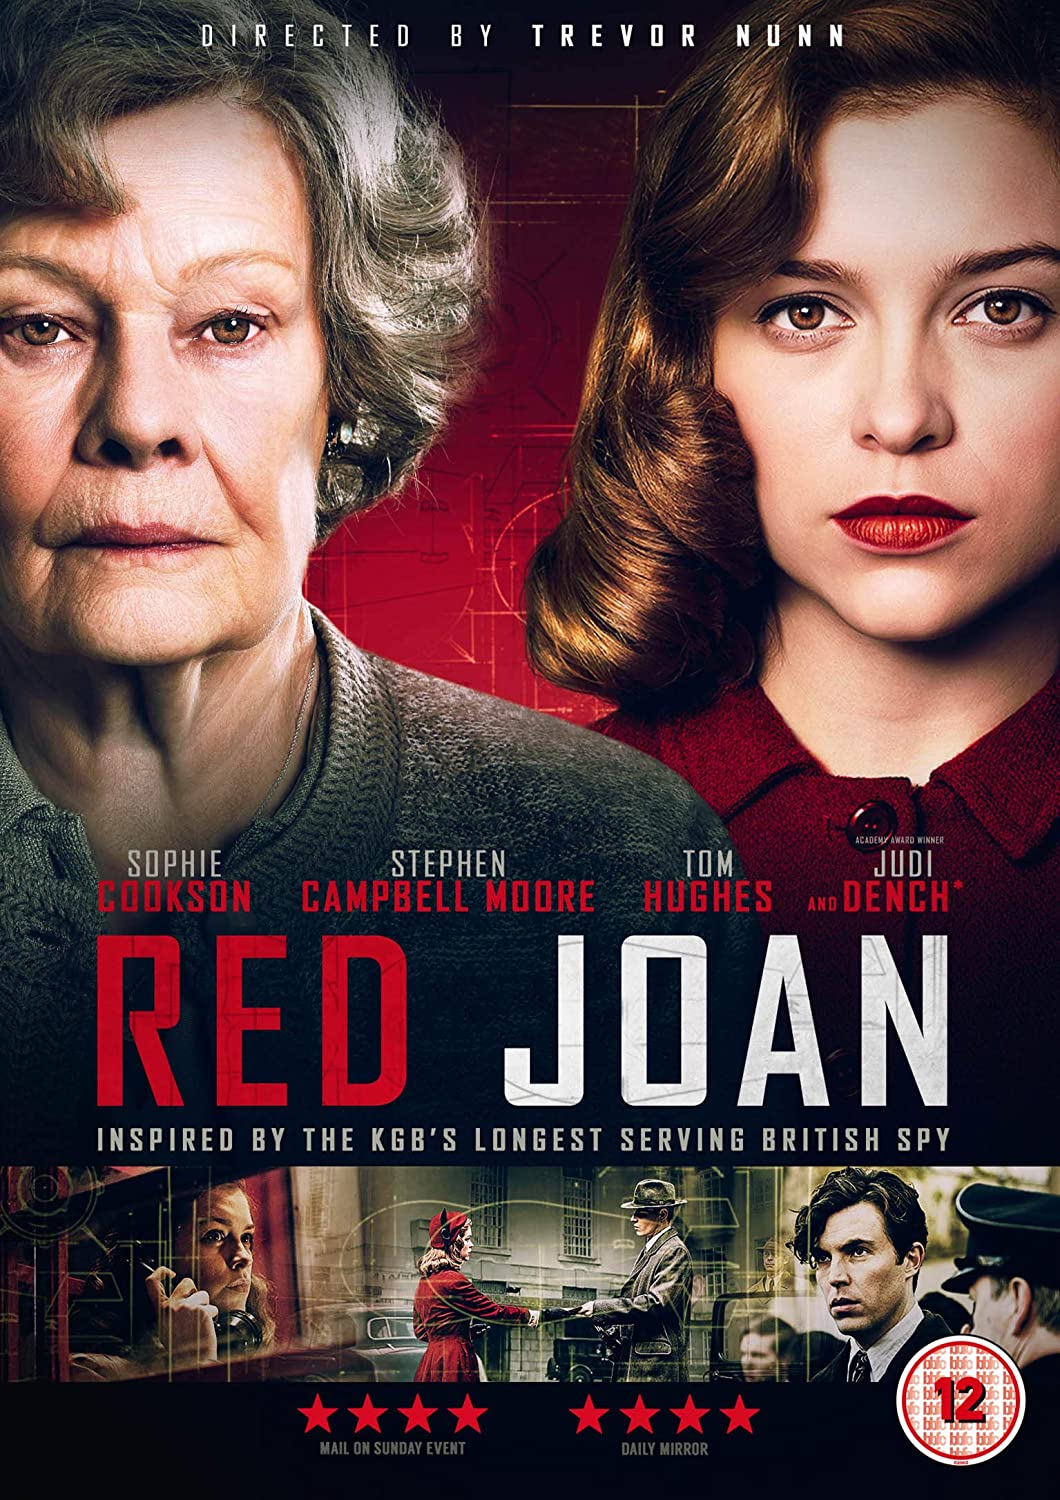 Red Joan - Drama/Thriller [DVD]